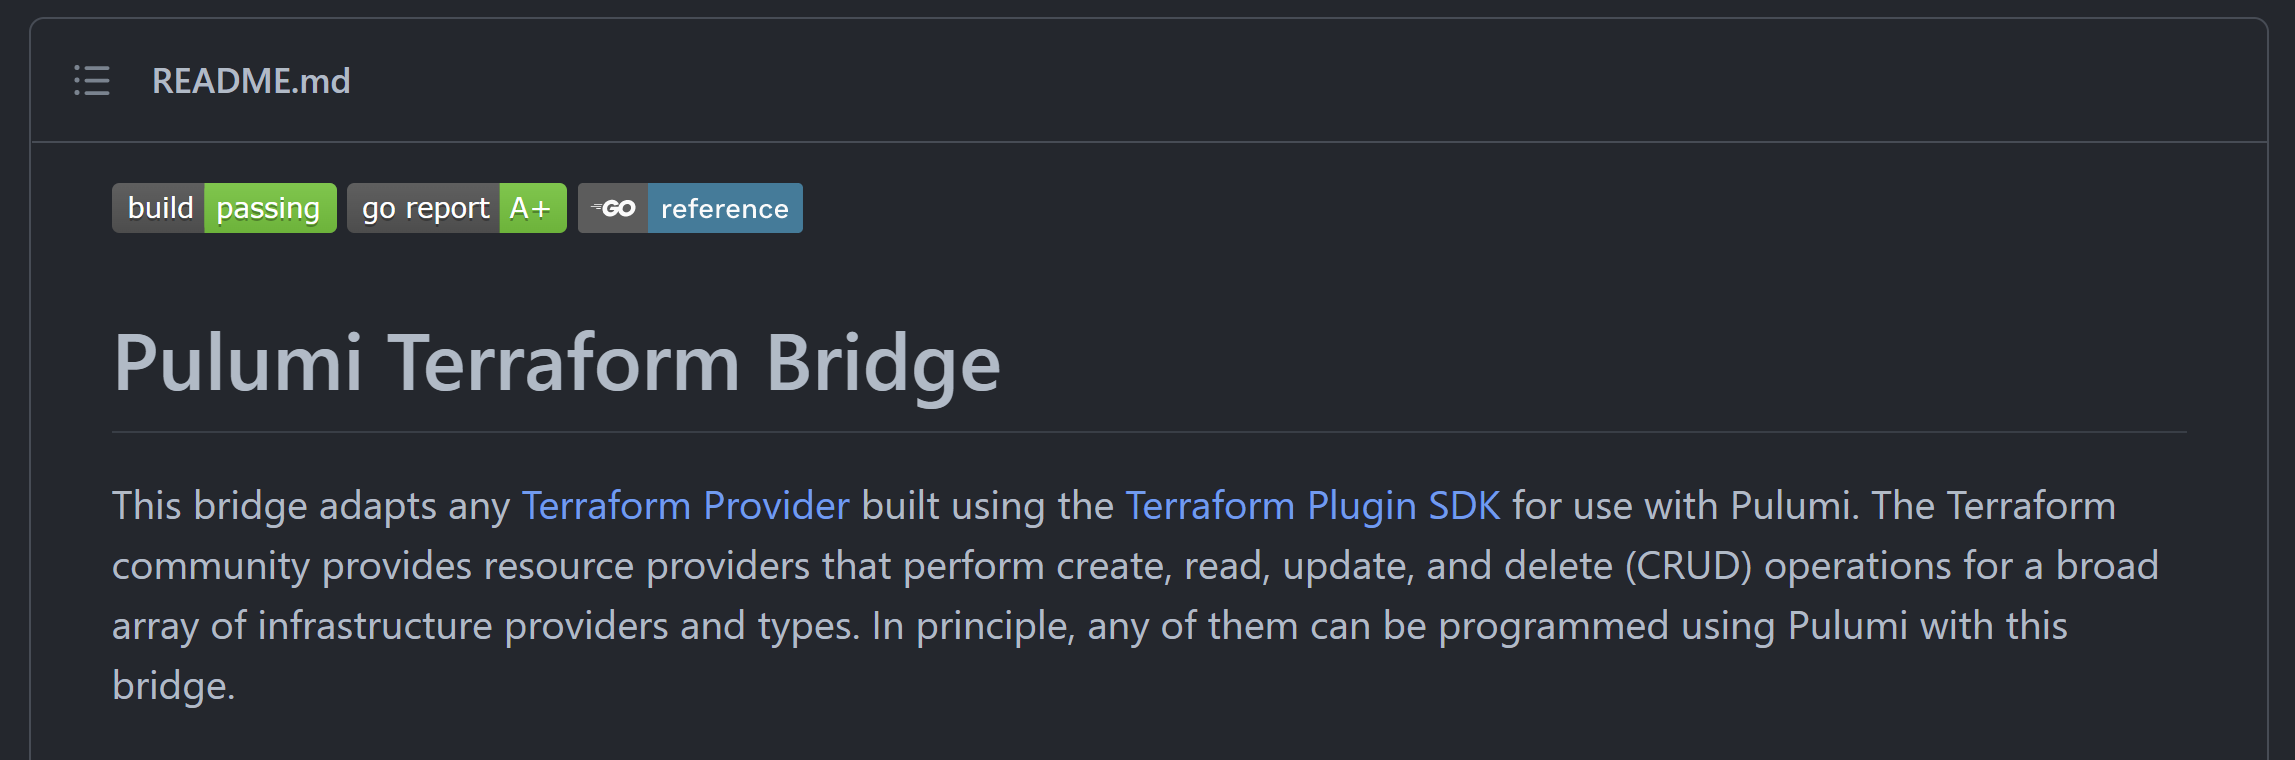 Pulumi Terraform Bridge repository on GitHub.